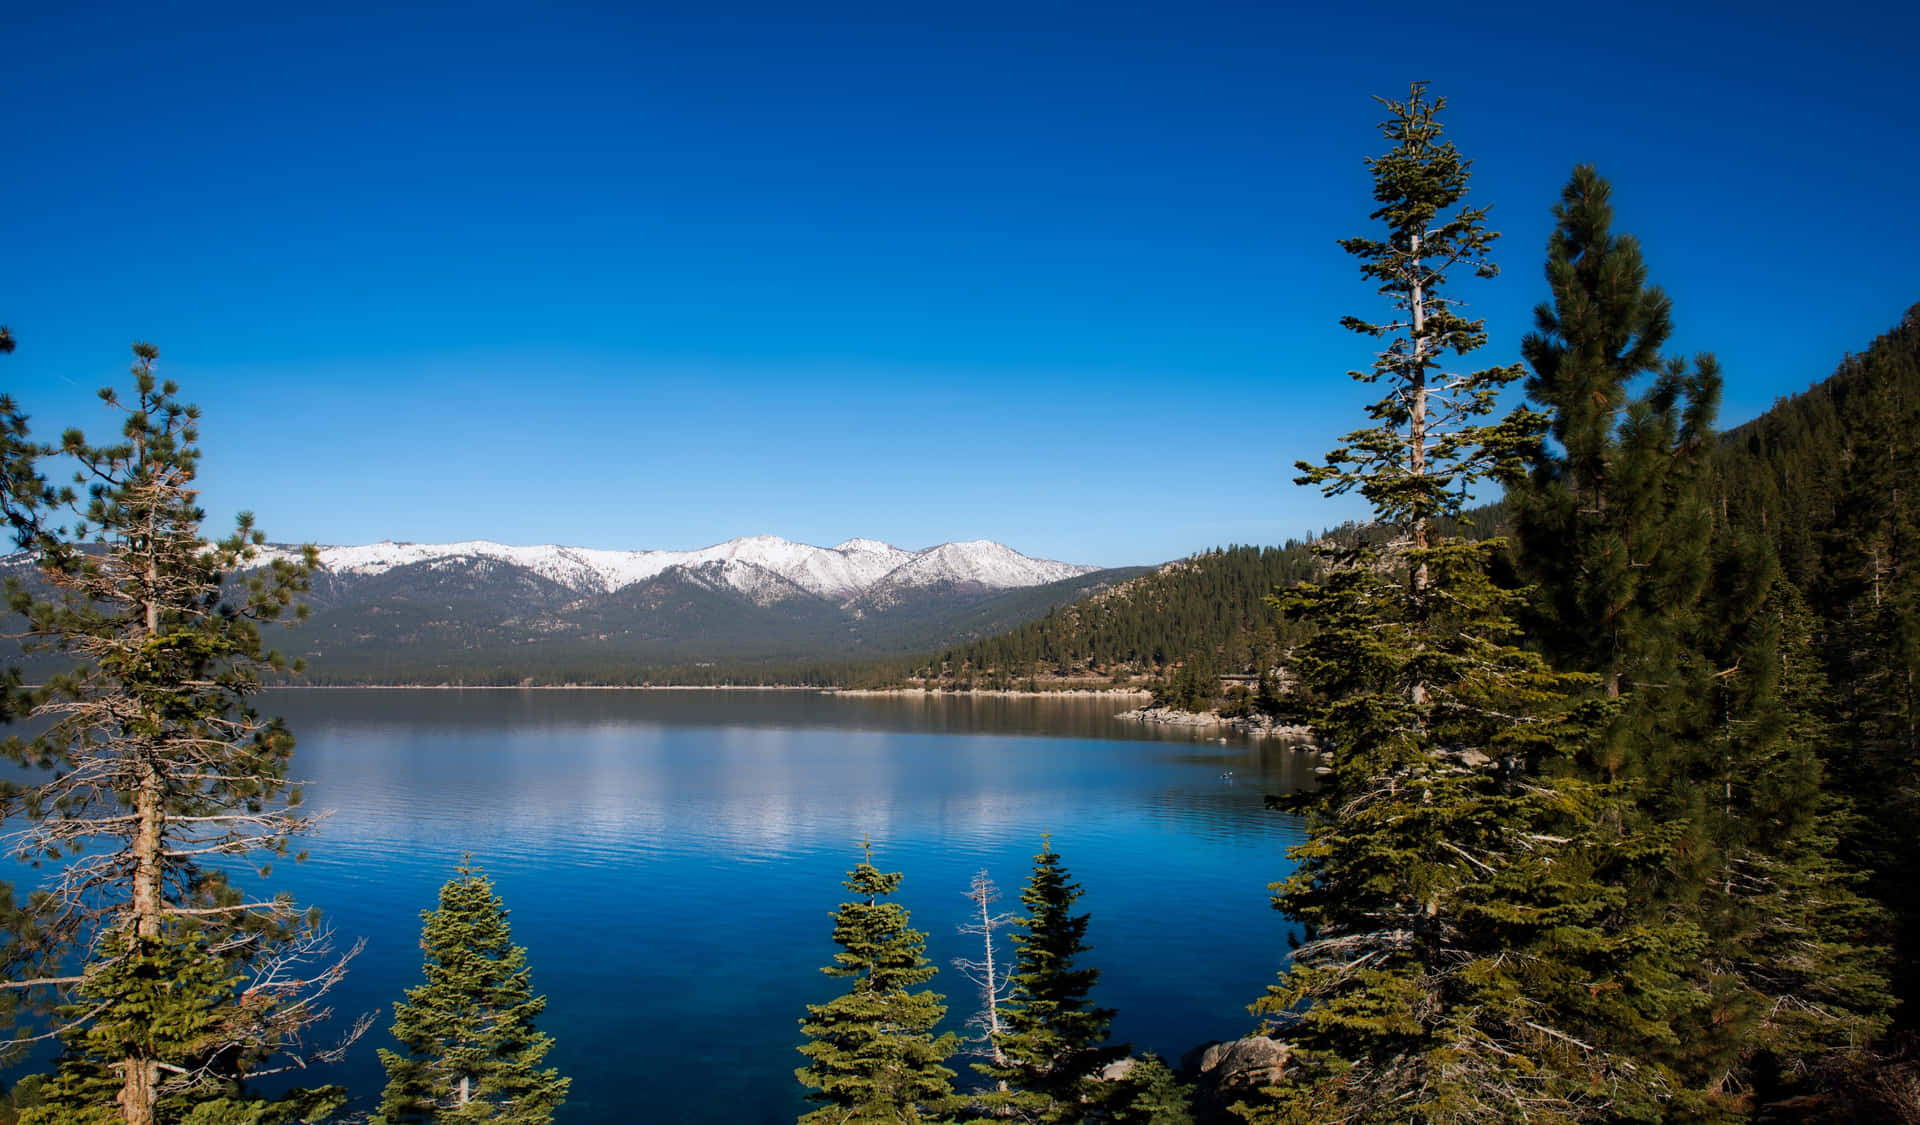 "Admire the stunning lake views at Lake Tahoe in California." Wallpaper